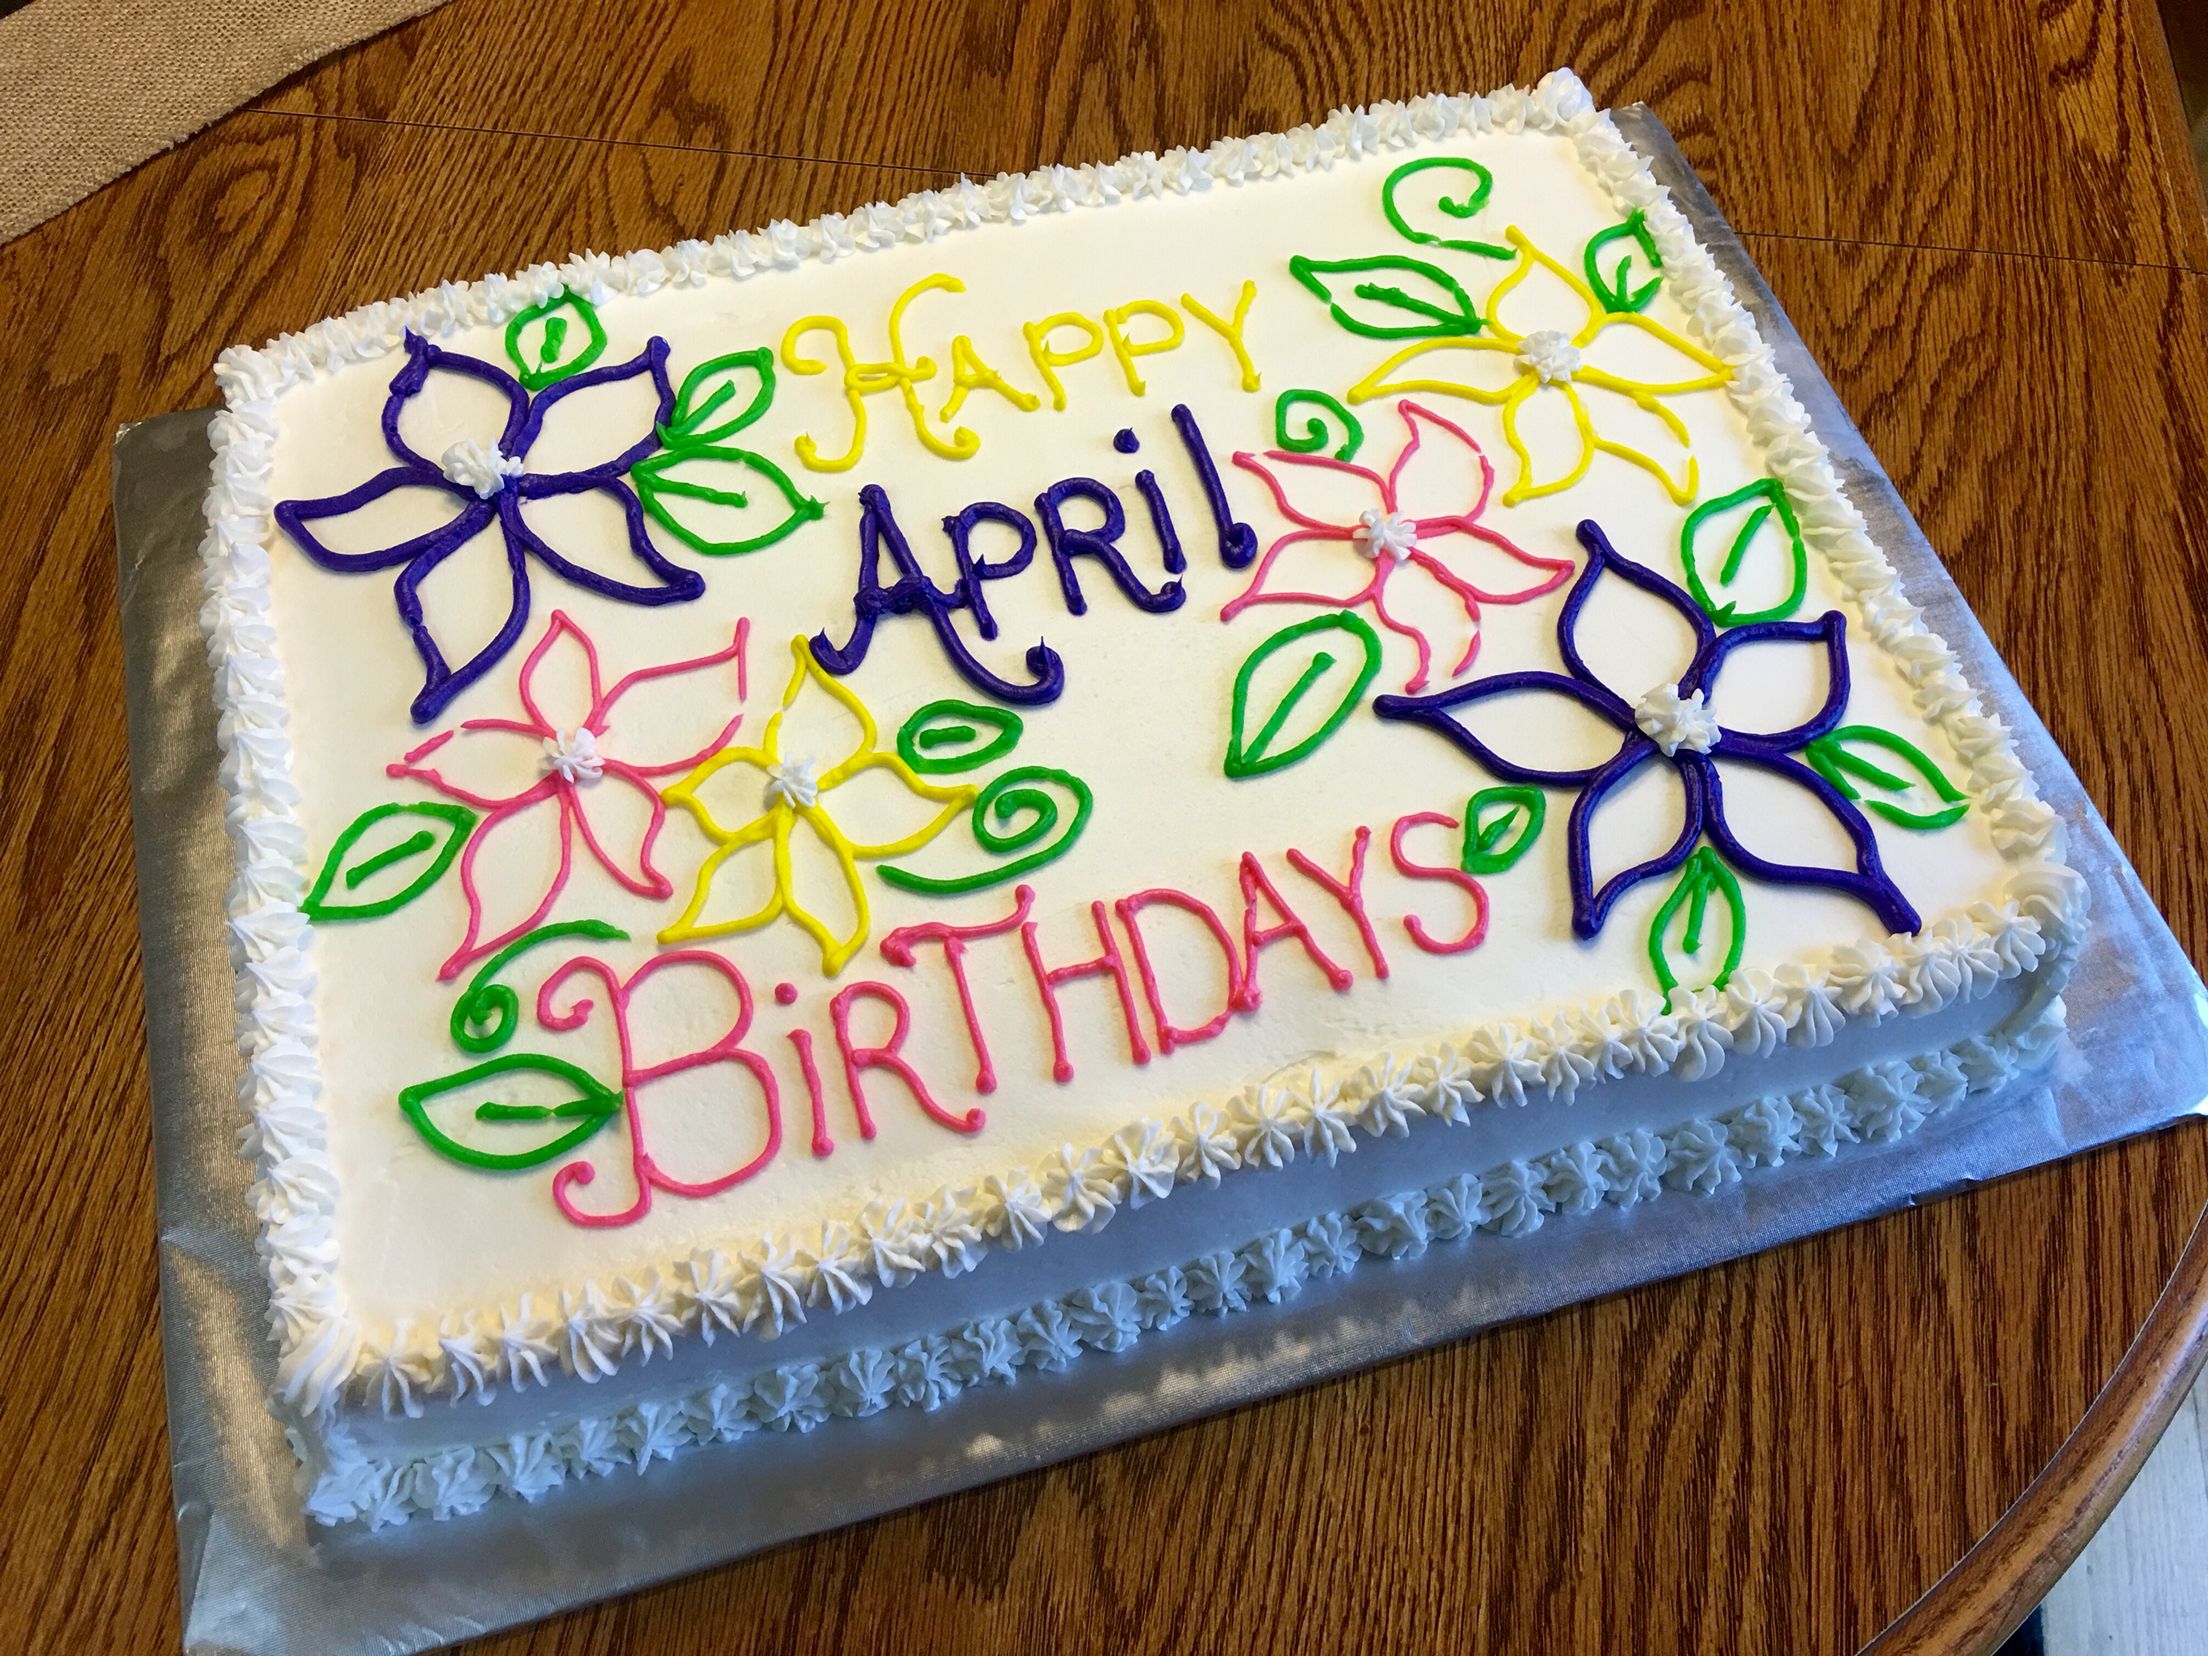 Happy birthday cake with April decorations